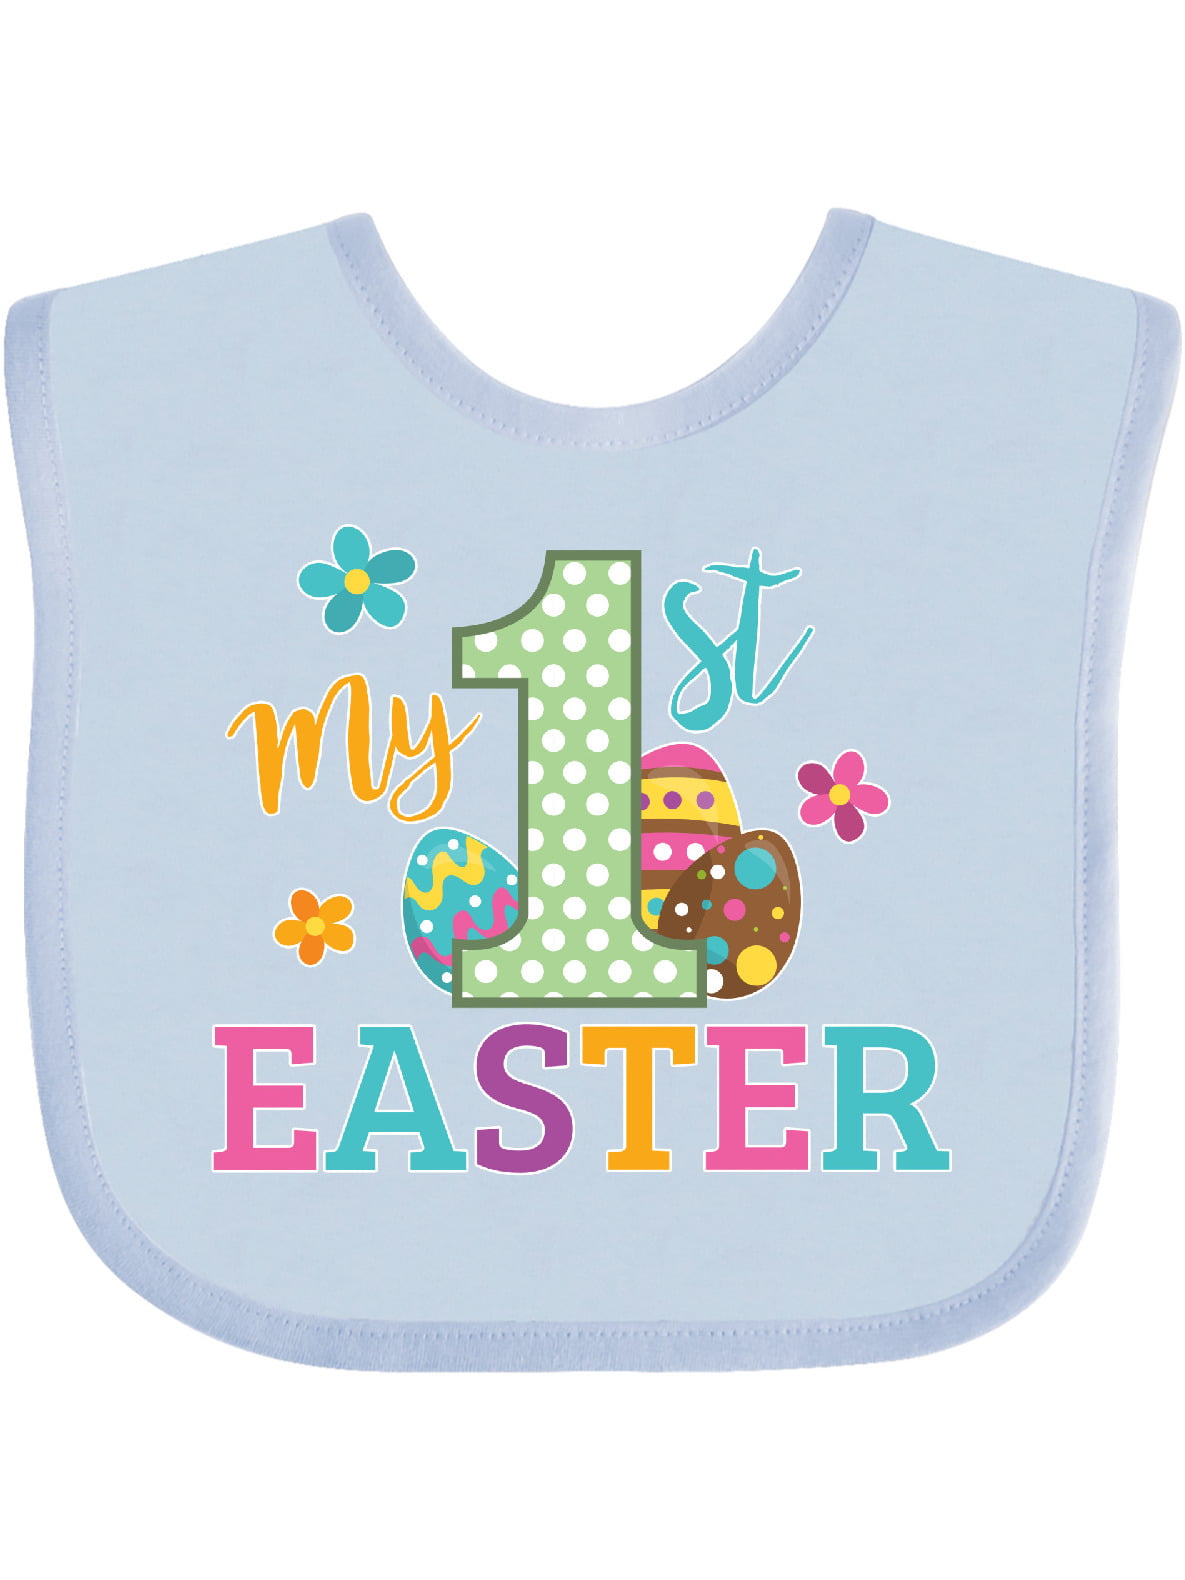 First holiday Embroidered Bib PERSONALIZED bib Baby's First EASTER Bib My First Easter bib Easter bib Baby or Toddler Bib baby Gift